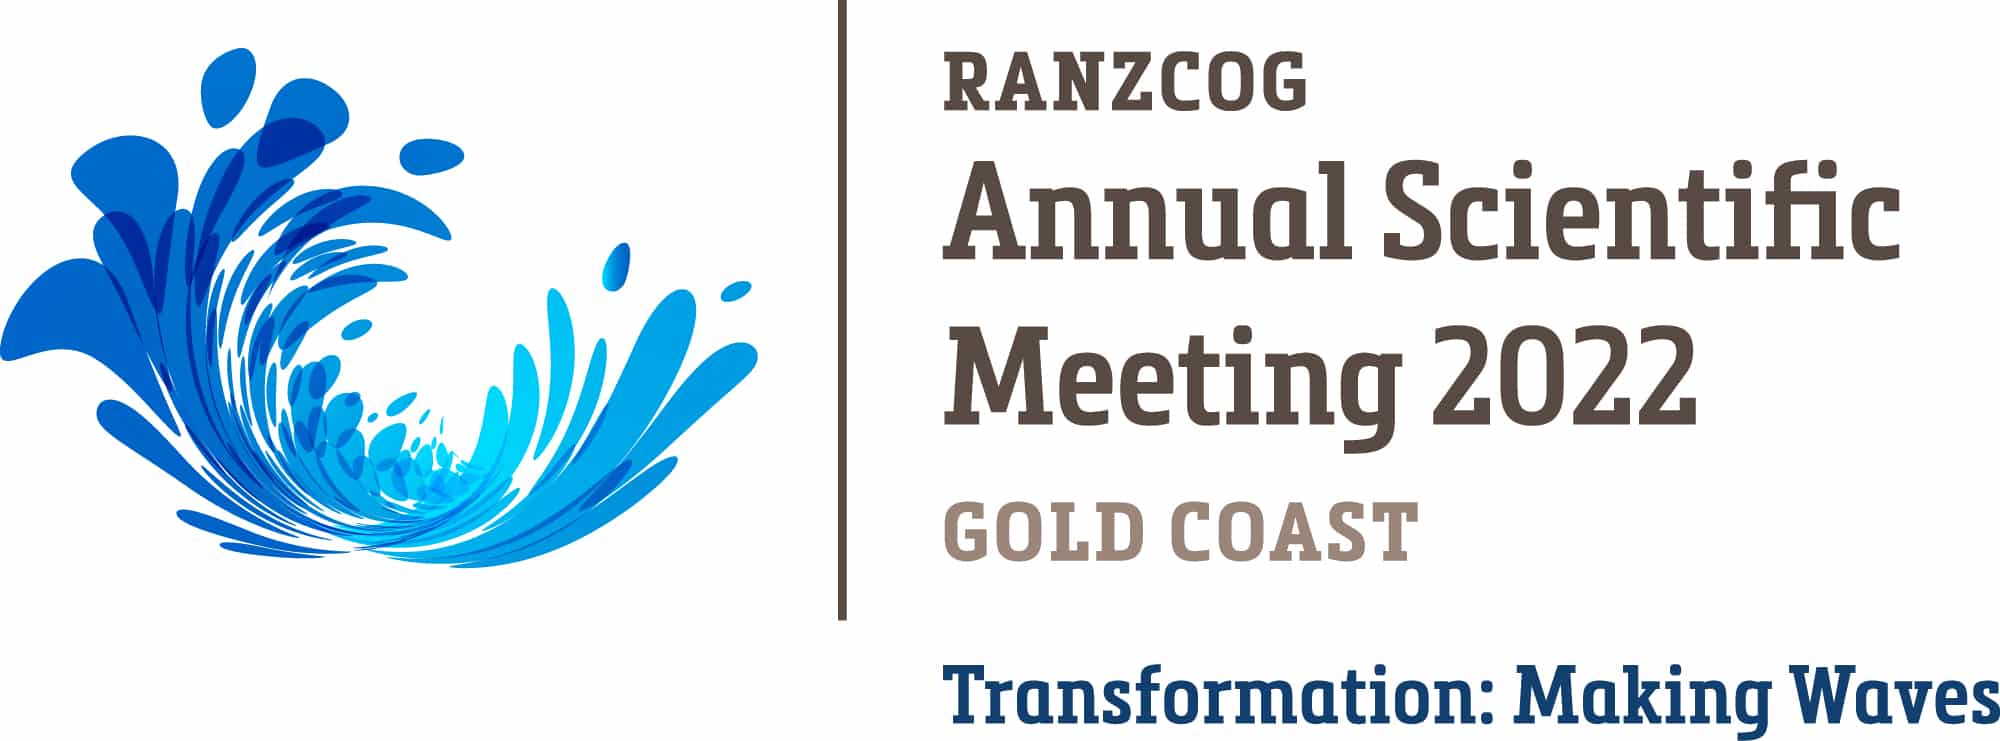 RANZCOG Annual Scientific Meeting 2022 logo